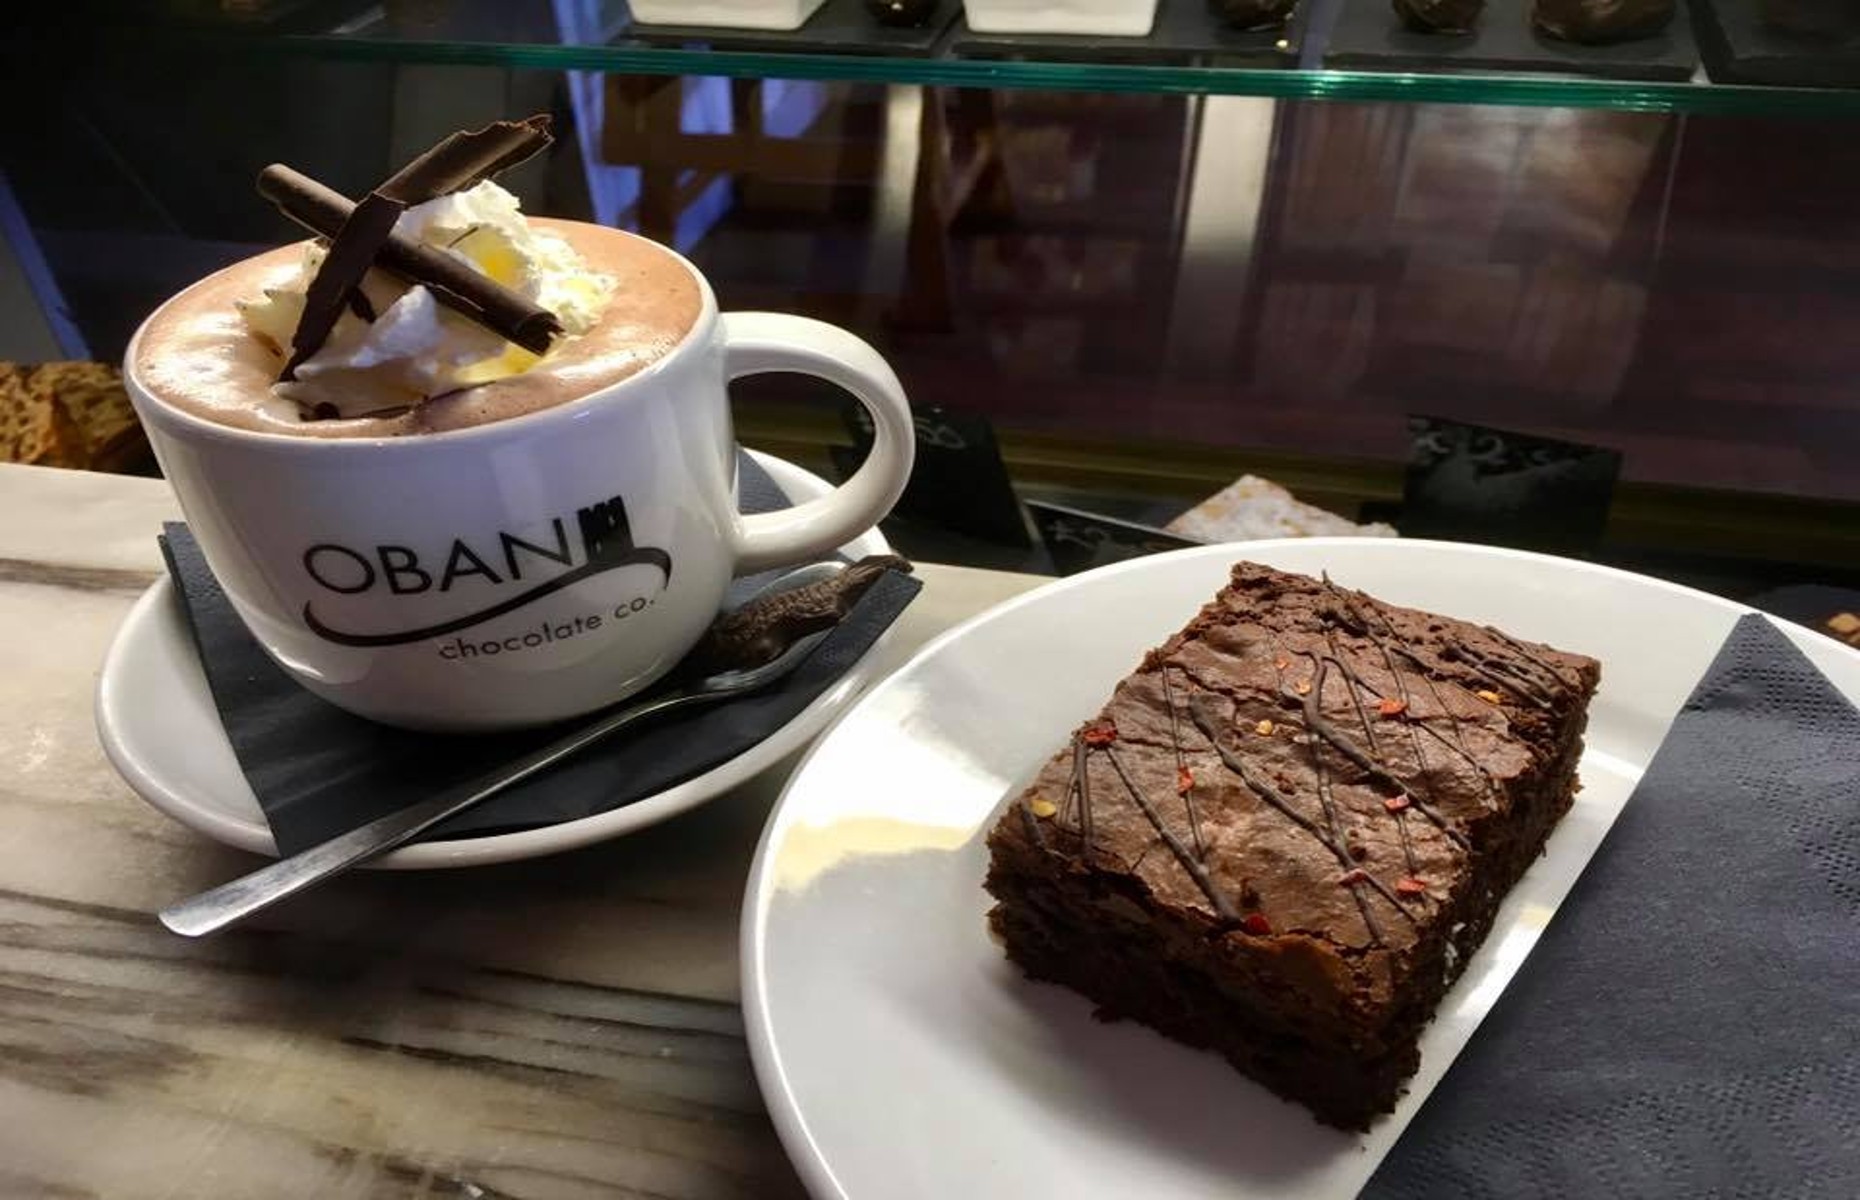 Hot chocolate at Oban Chocolate Company (Image: Oban Chocolate Company/Facebook)